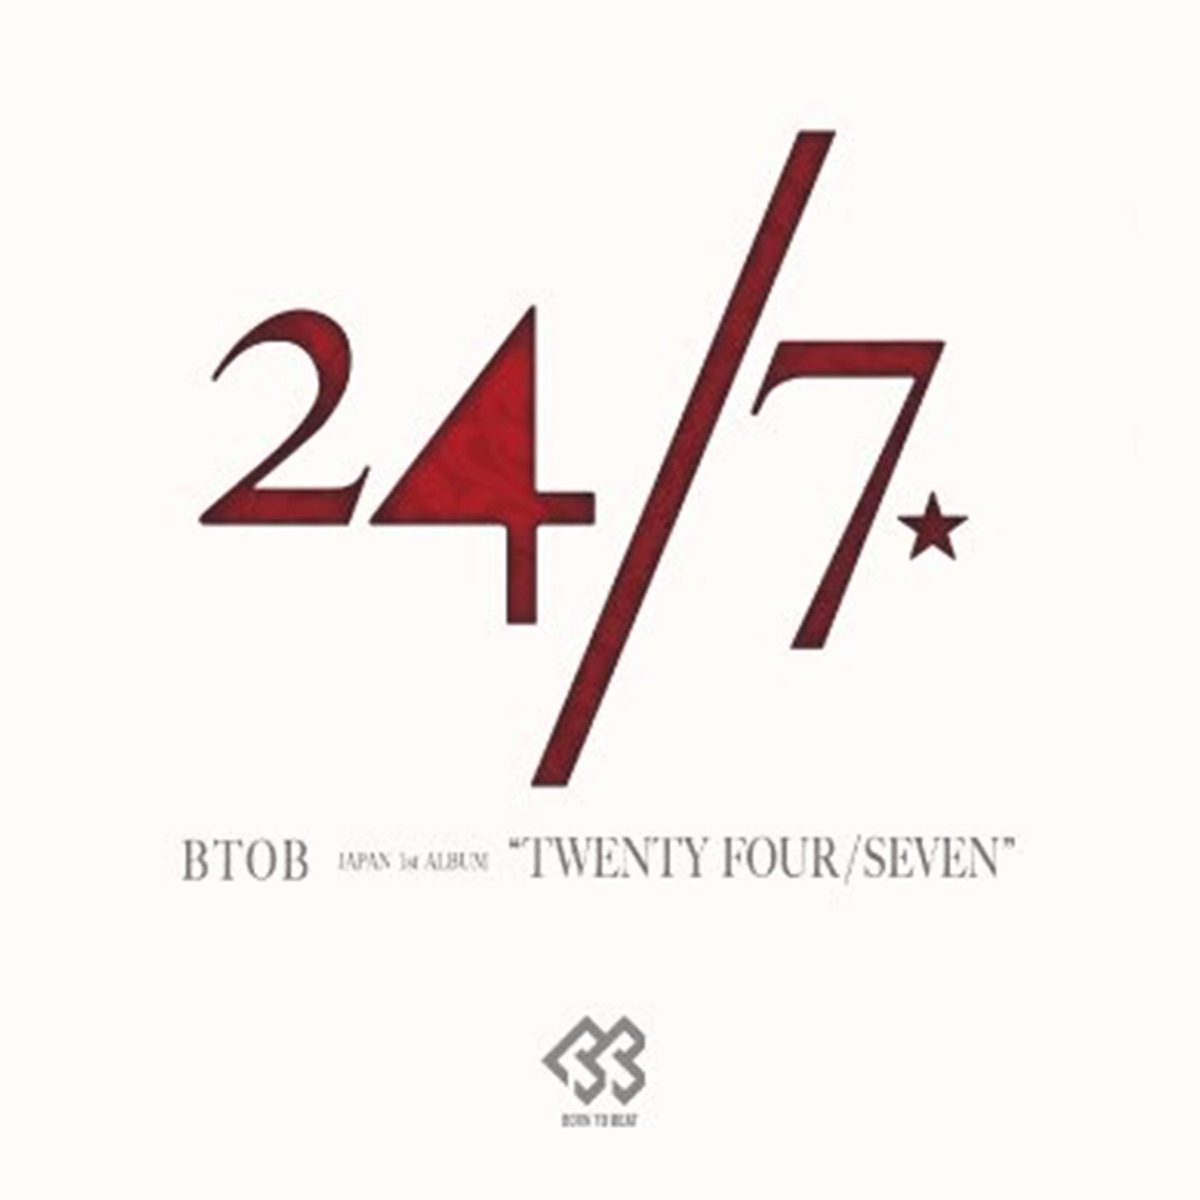 BTOB – 24/7 (TWENTY FOUR/SEVEN)